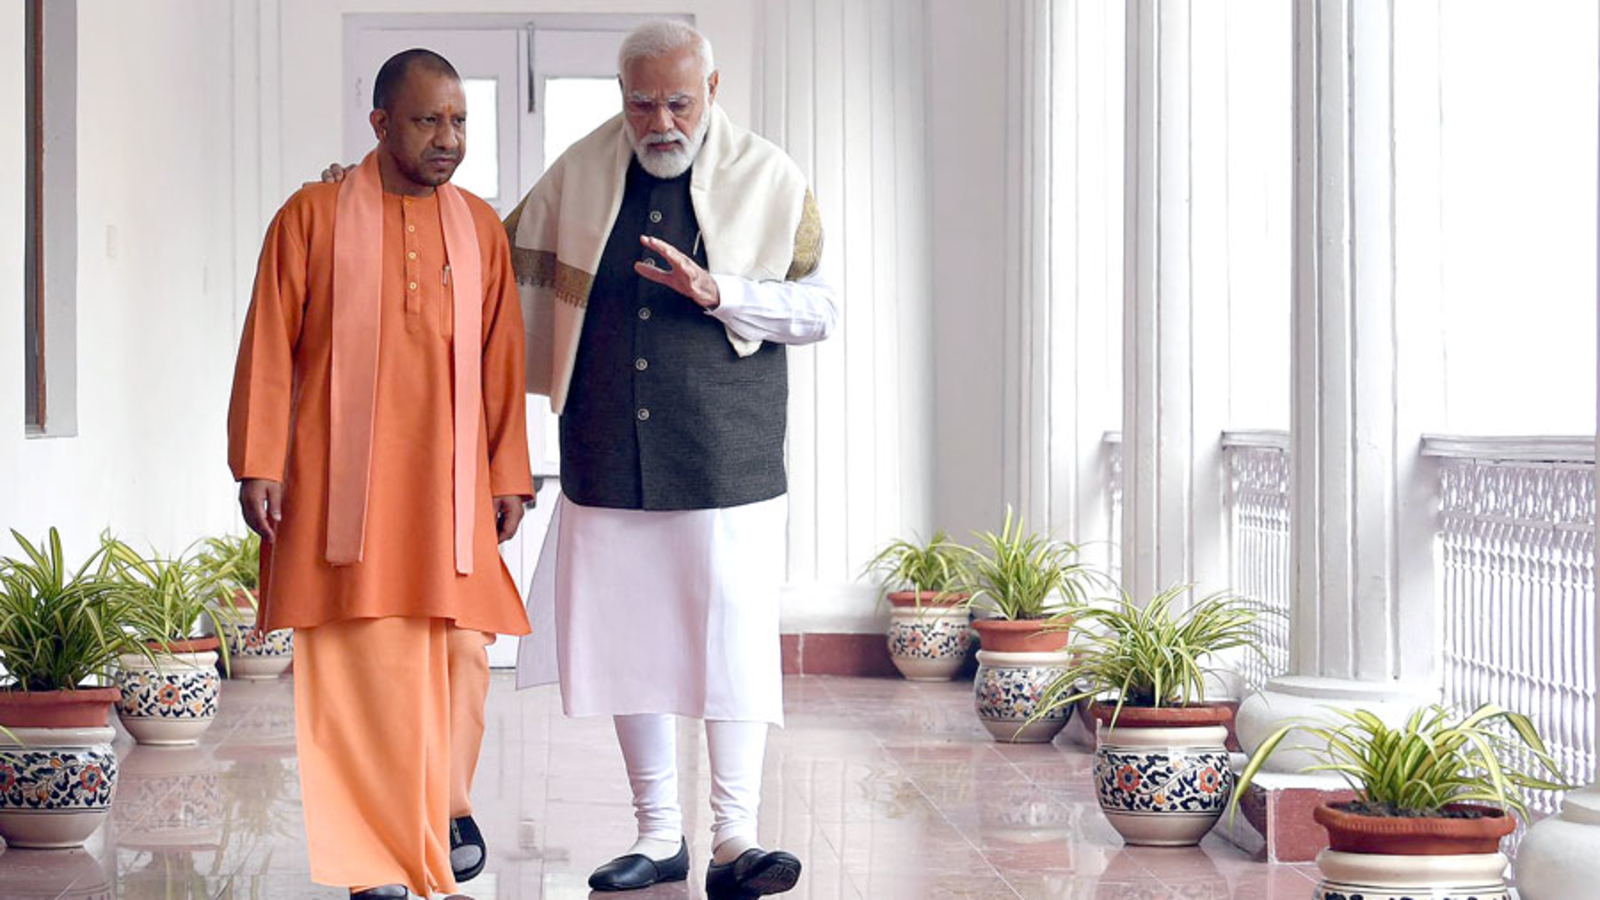 To make a new India': Yogi Adityanath meets Modi in Lucknow - Hindustan  Times